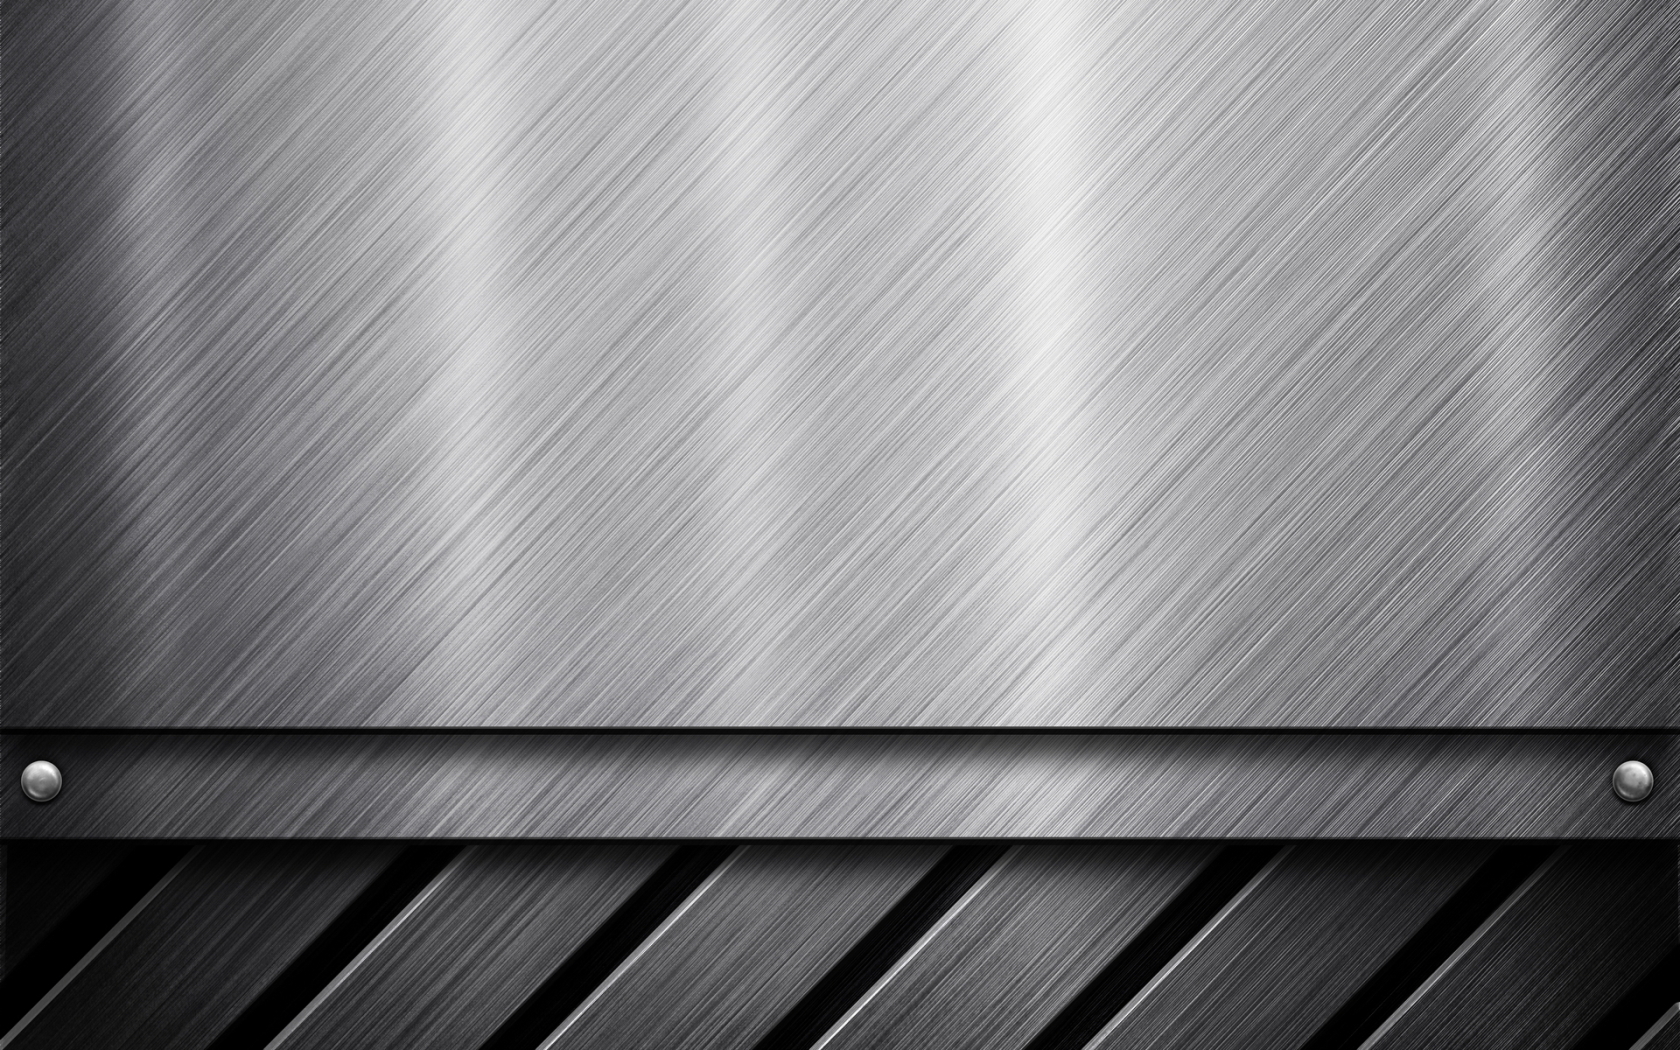 wallpaper metalico,line,wood,metal,black and white,floor